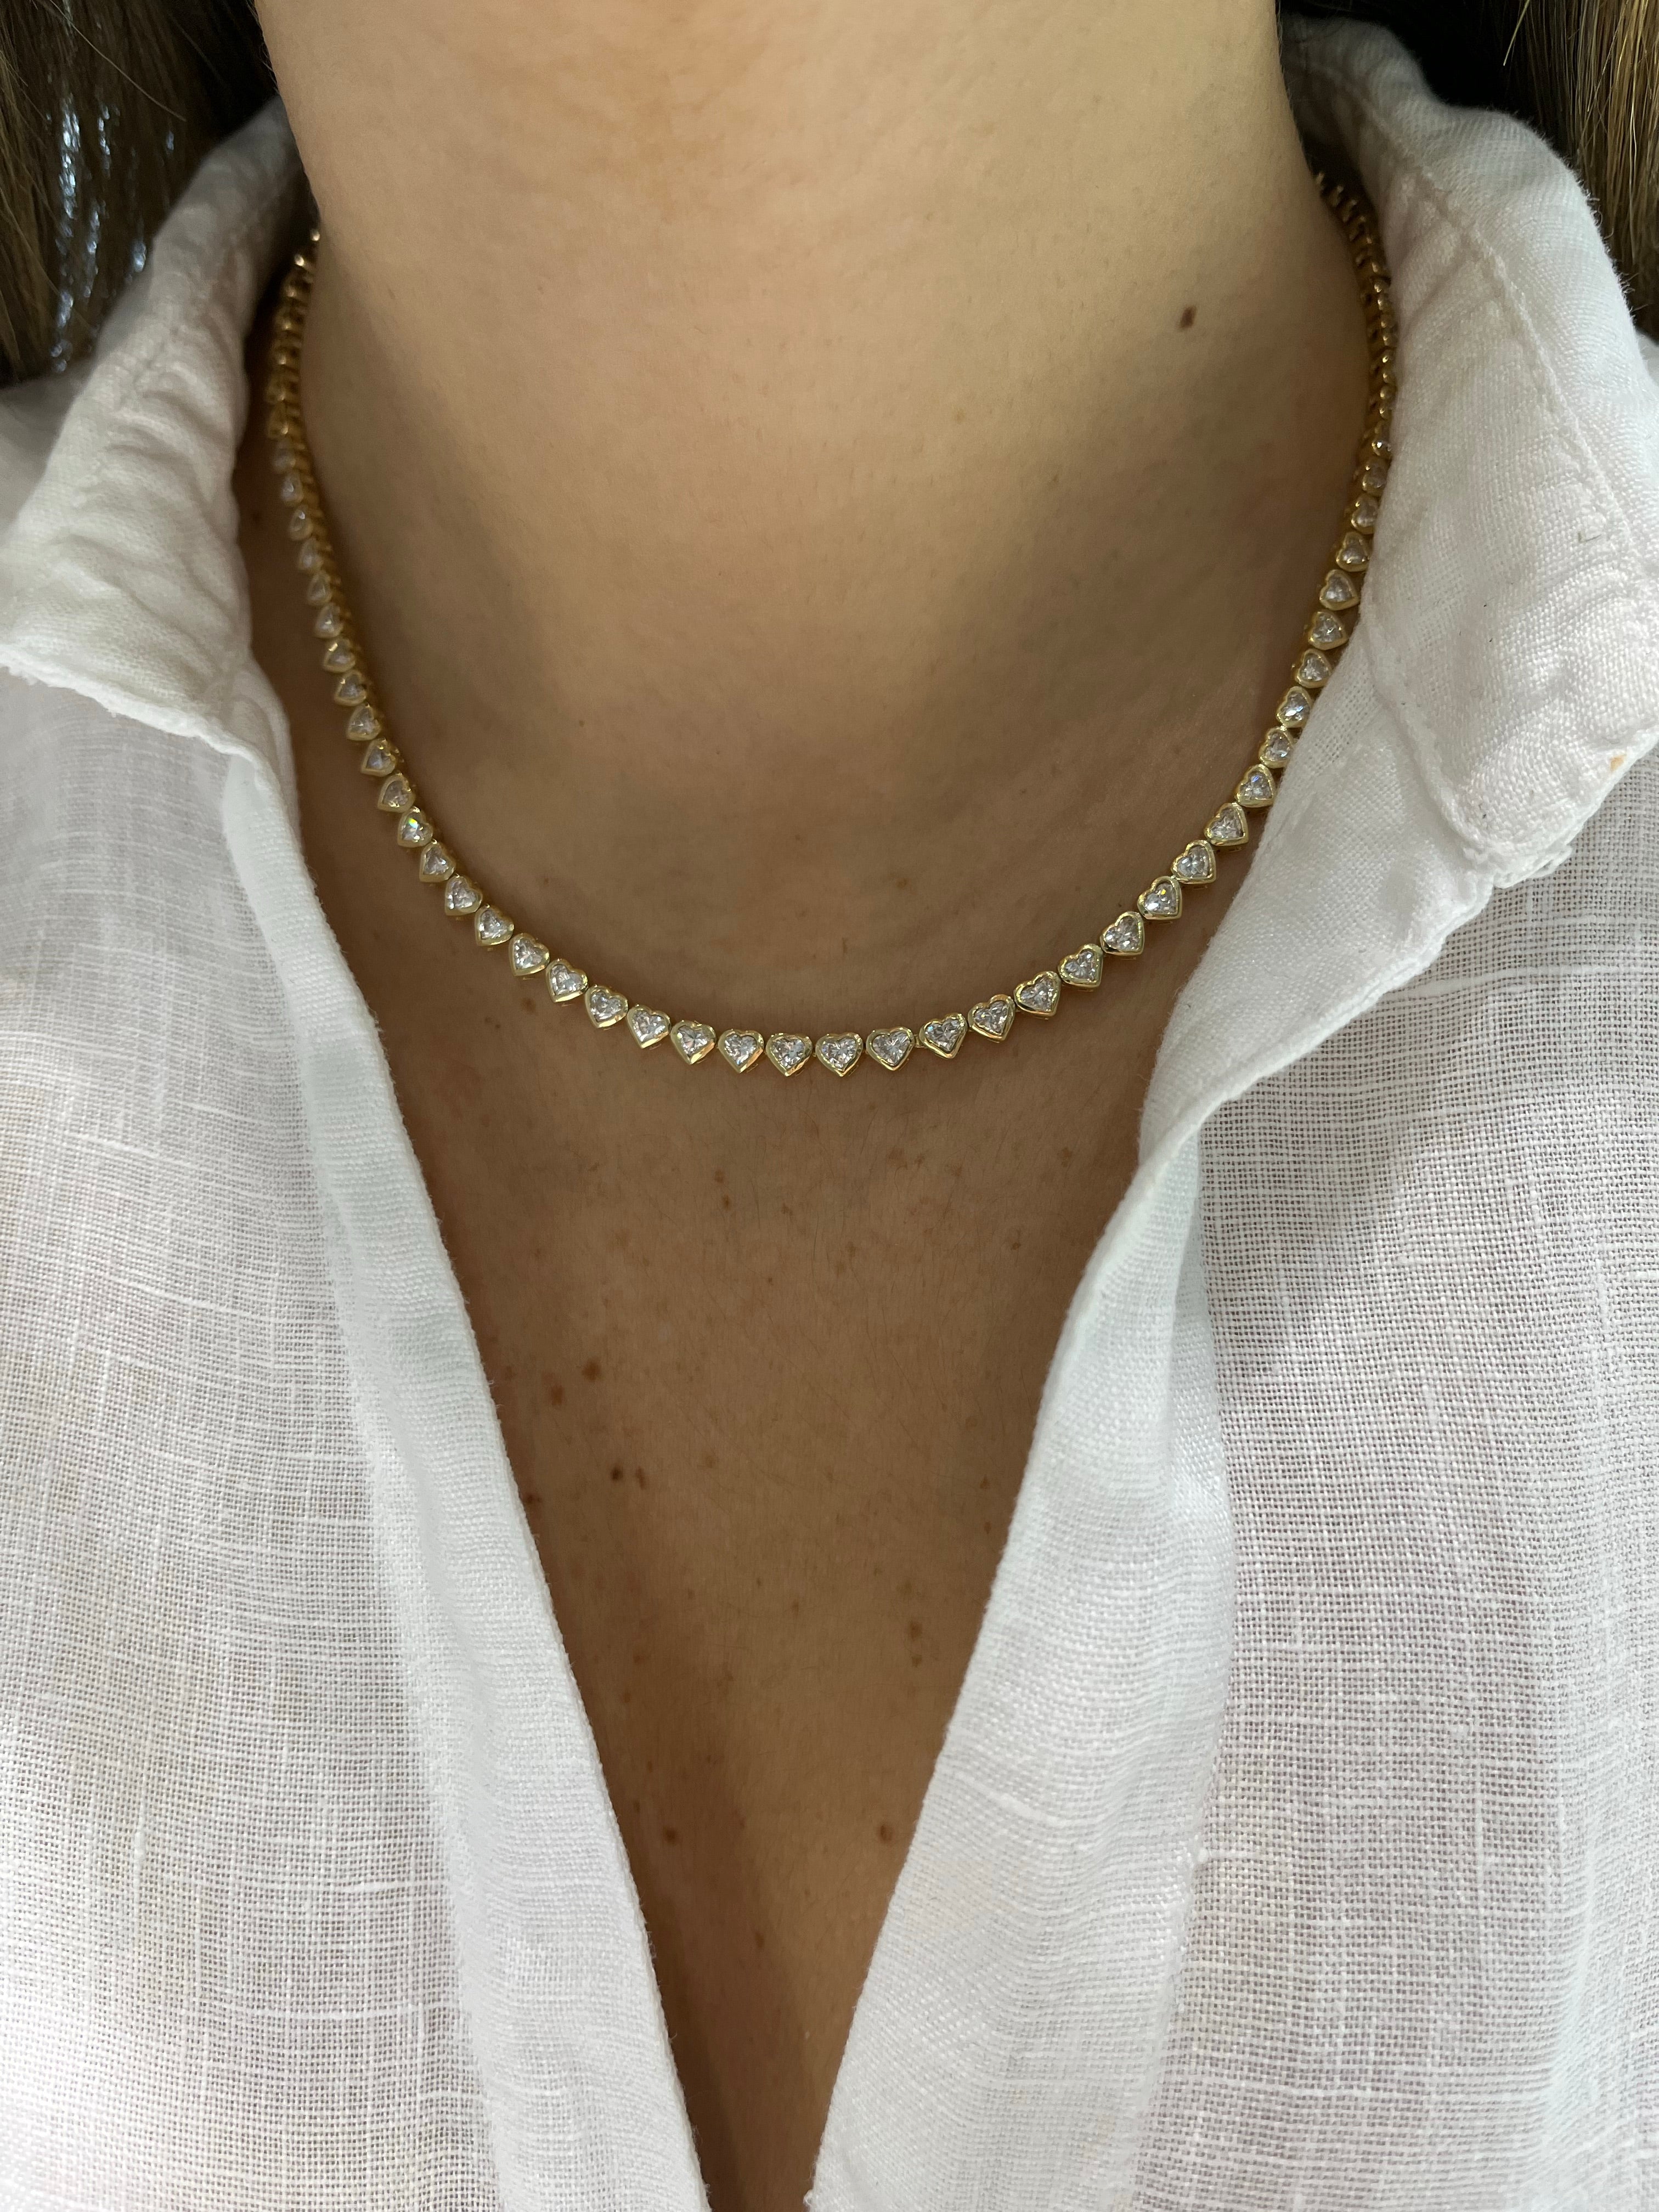 Half Way Bezel-Set Heart Shape Diamond Tennis Necklace